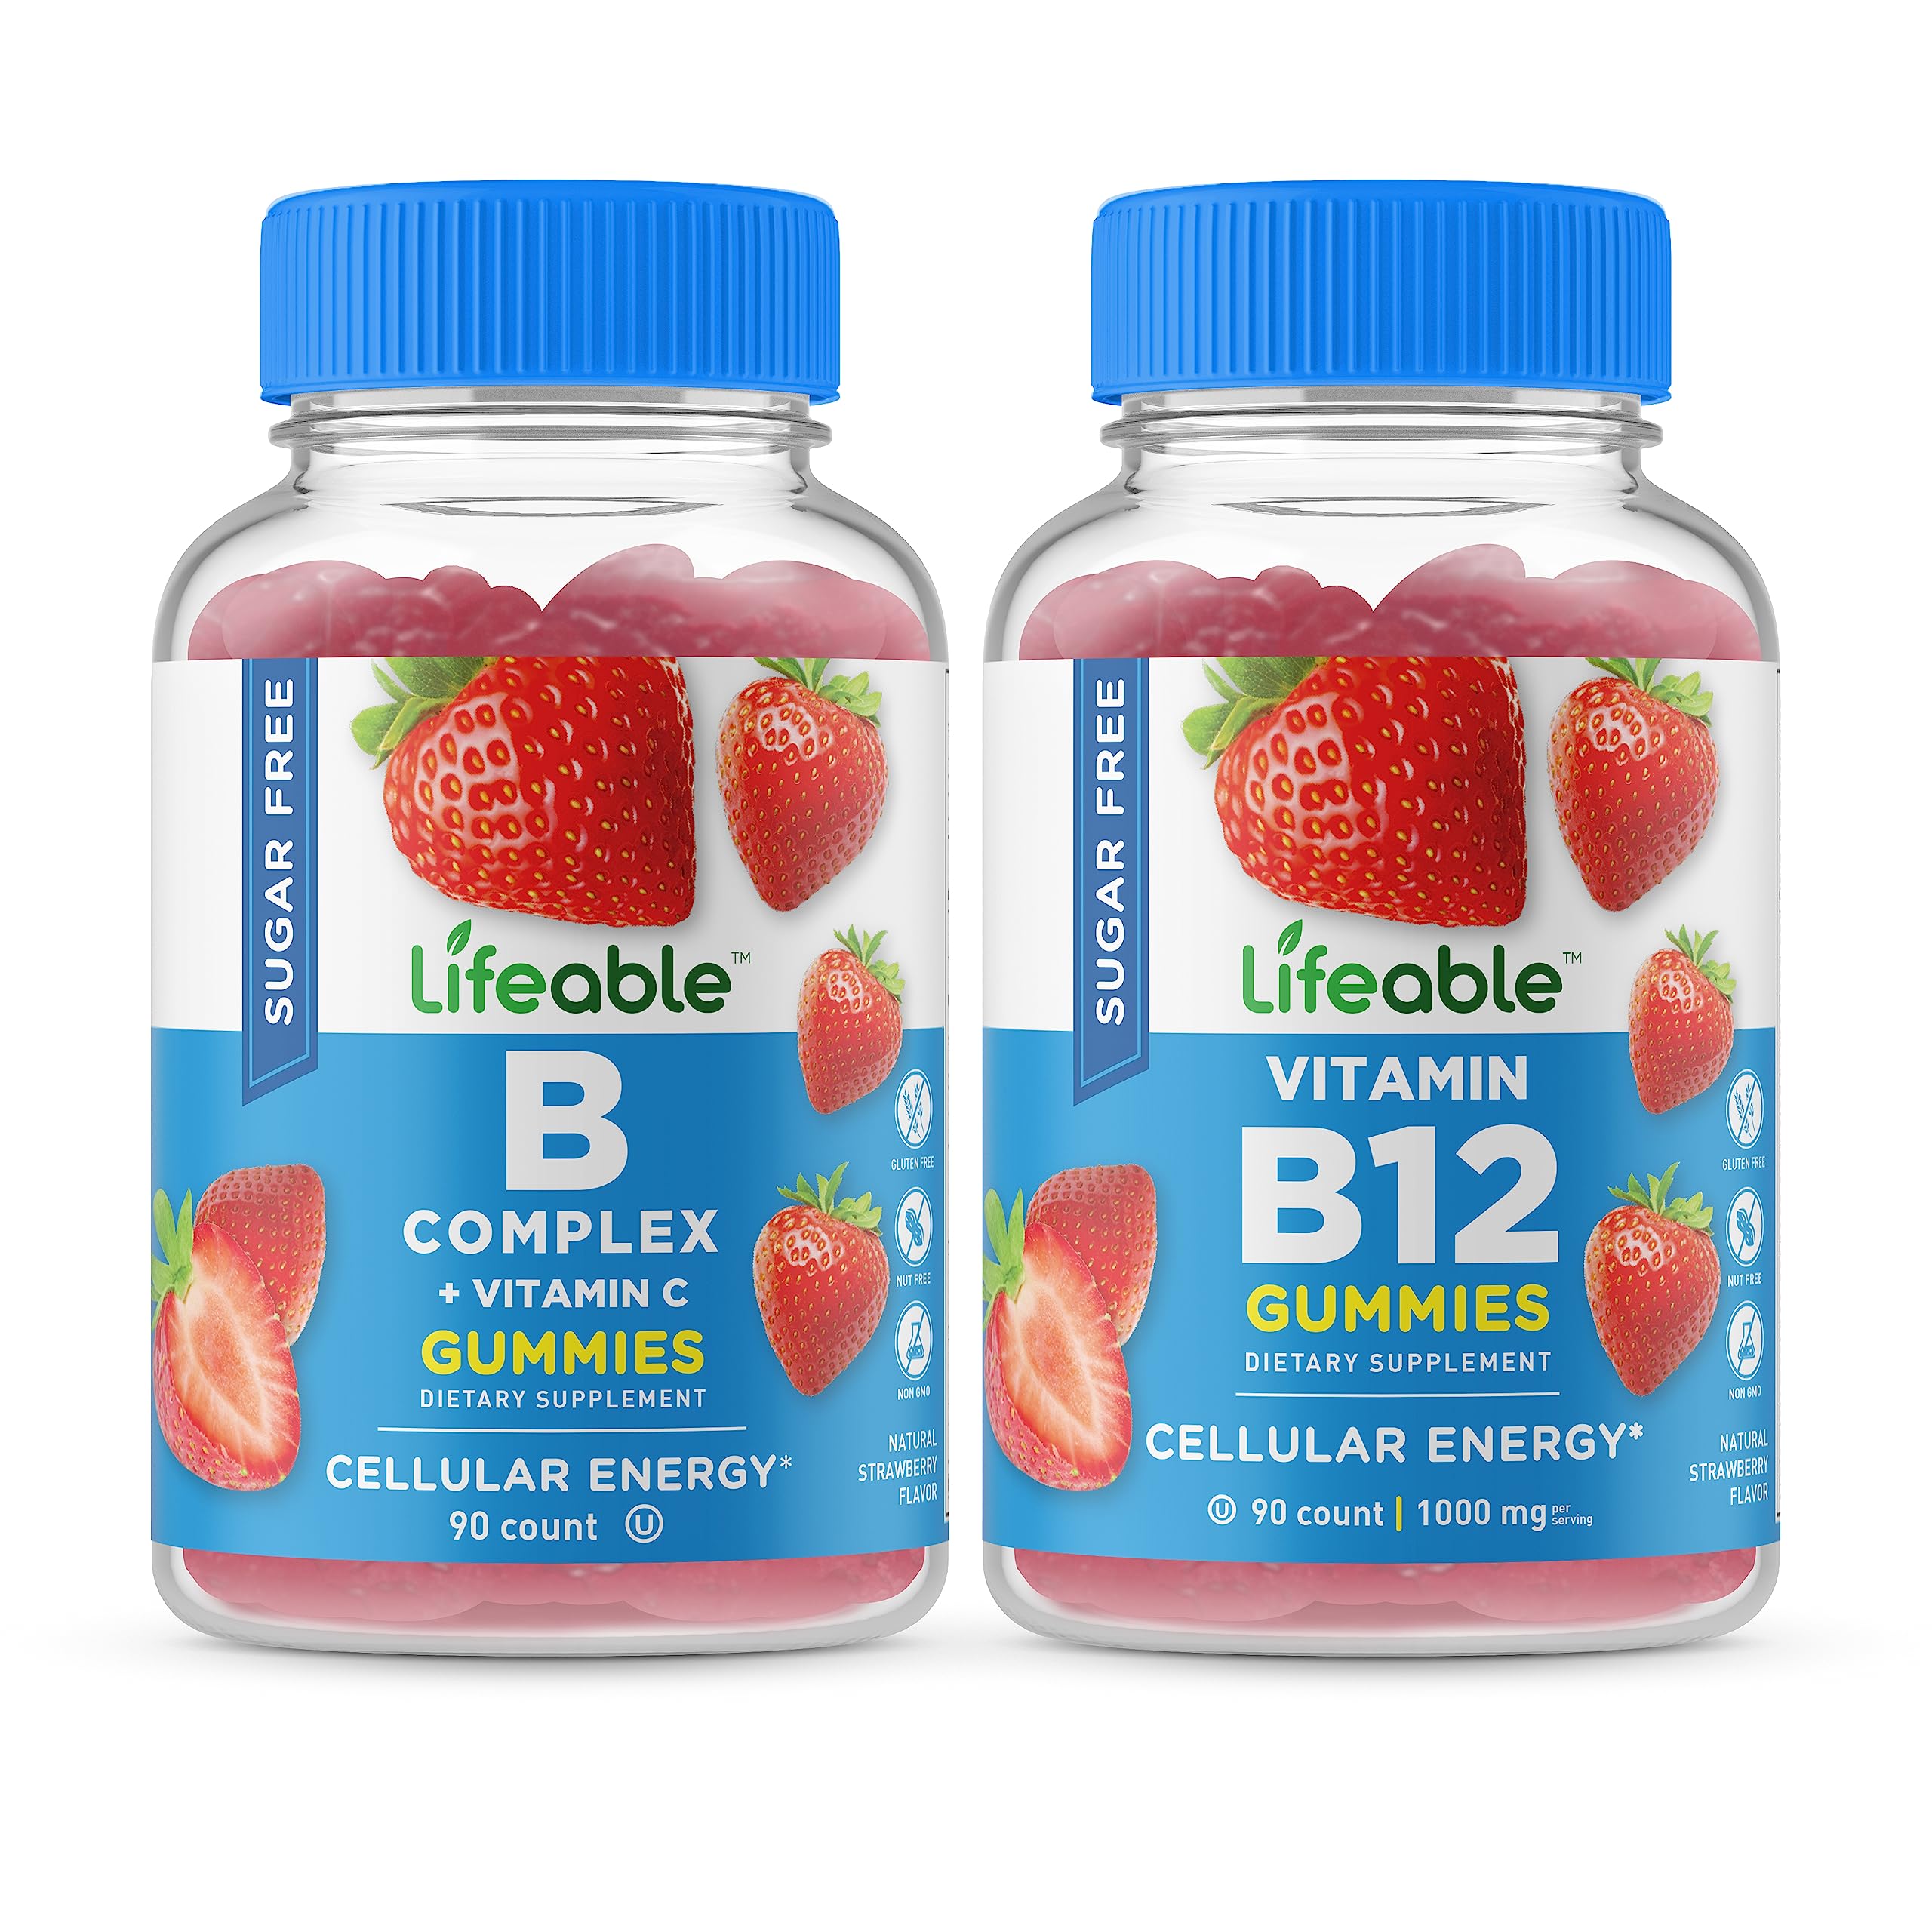 Lifeable Sugar Free B Complex + Vitamin B12, Gummies Bundle - Great Tasting, Vitamin Supplement, Gluten Free, GMO Free, Chewable Gummy